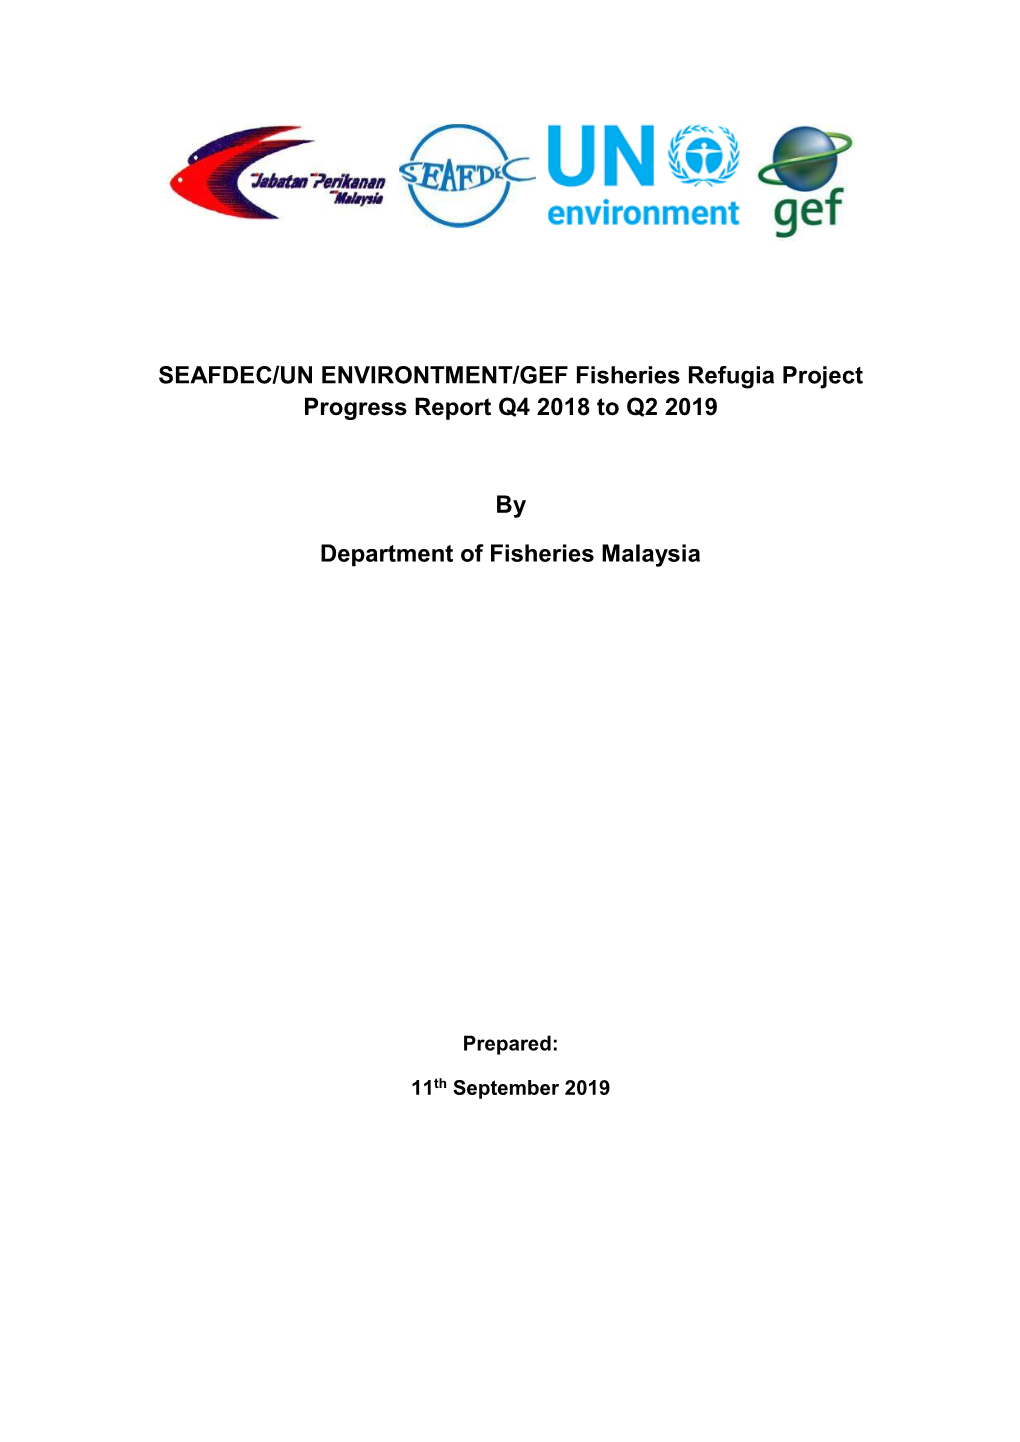 SEAFDEC/UN ENVIRONTMENT/GEF Fisheries Refugia Project Progress Report Q4 2018 to Q2 2019